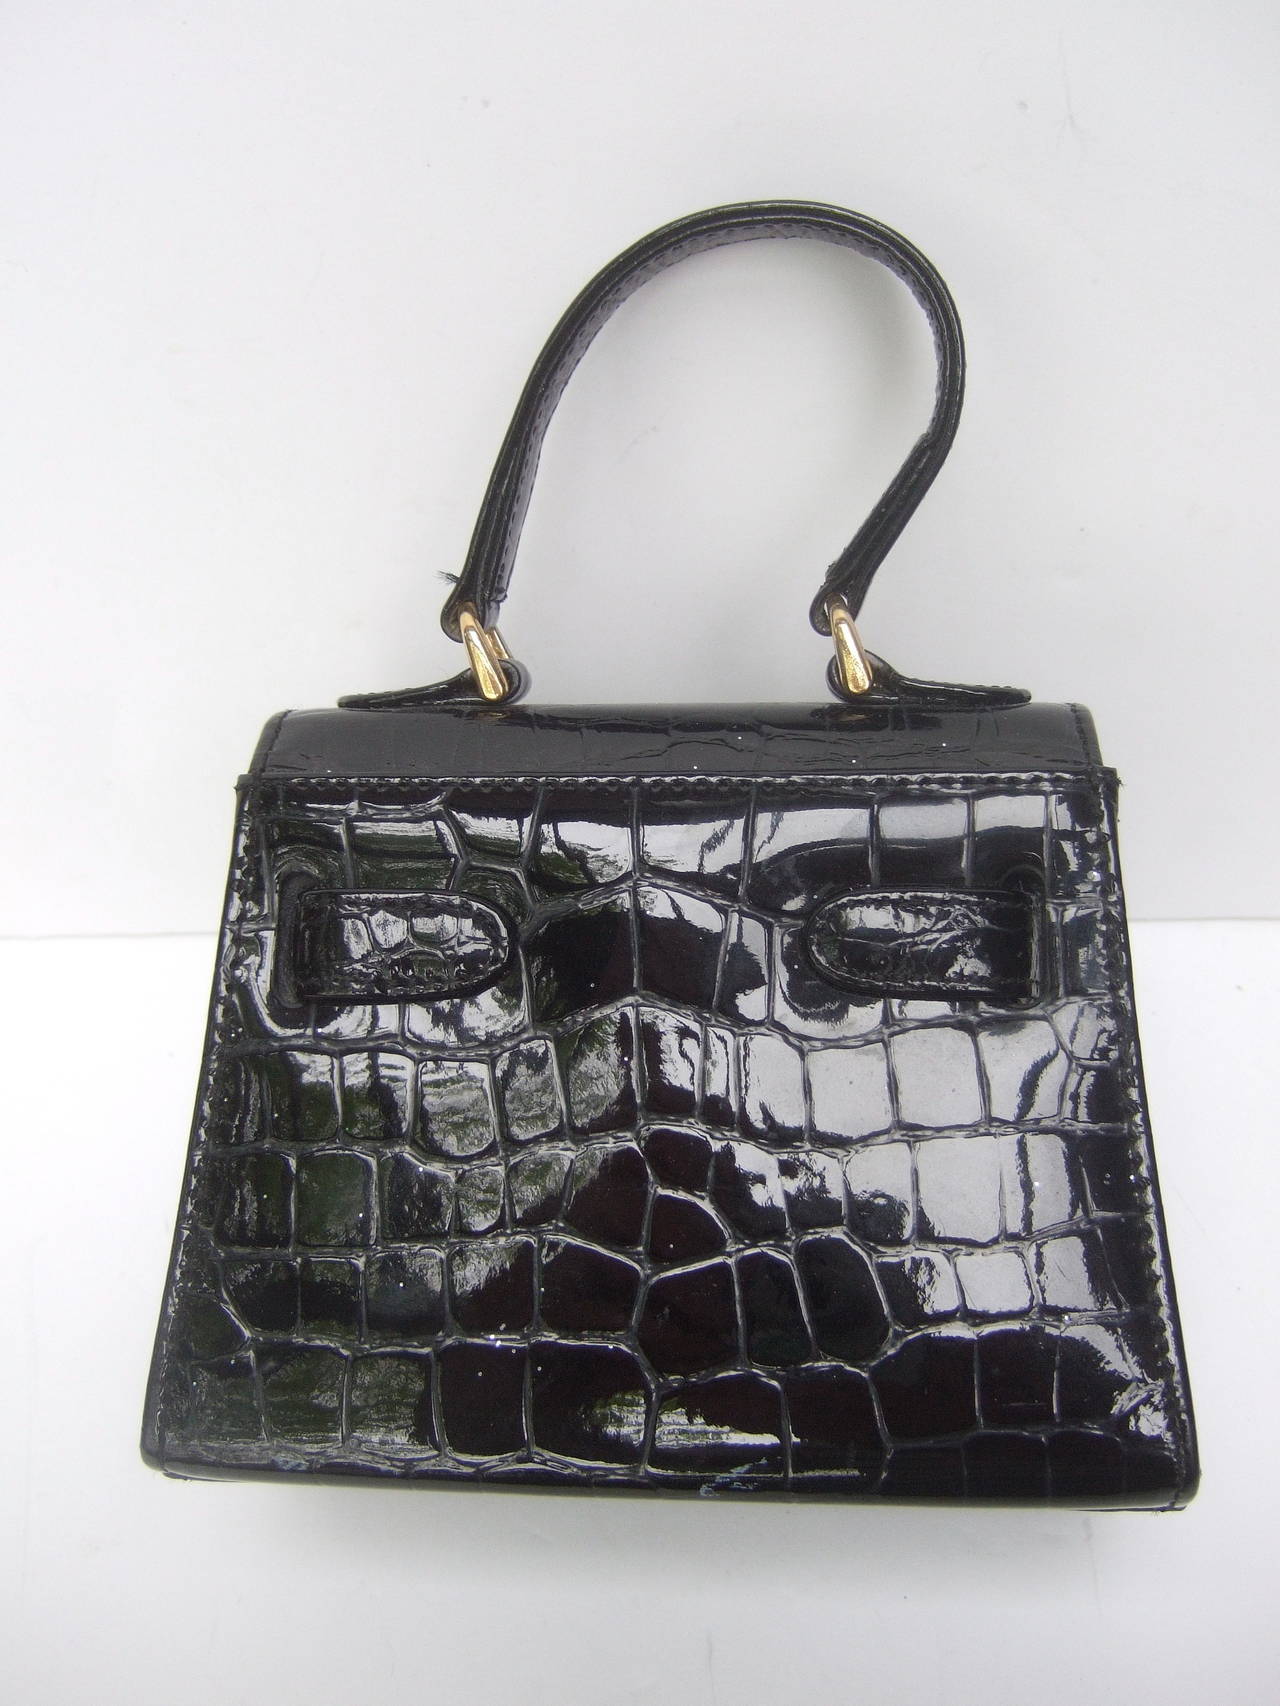 Diminutive Black Embossed Patent Leather Handbag Made in Italy 2